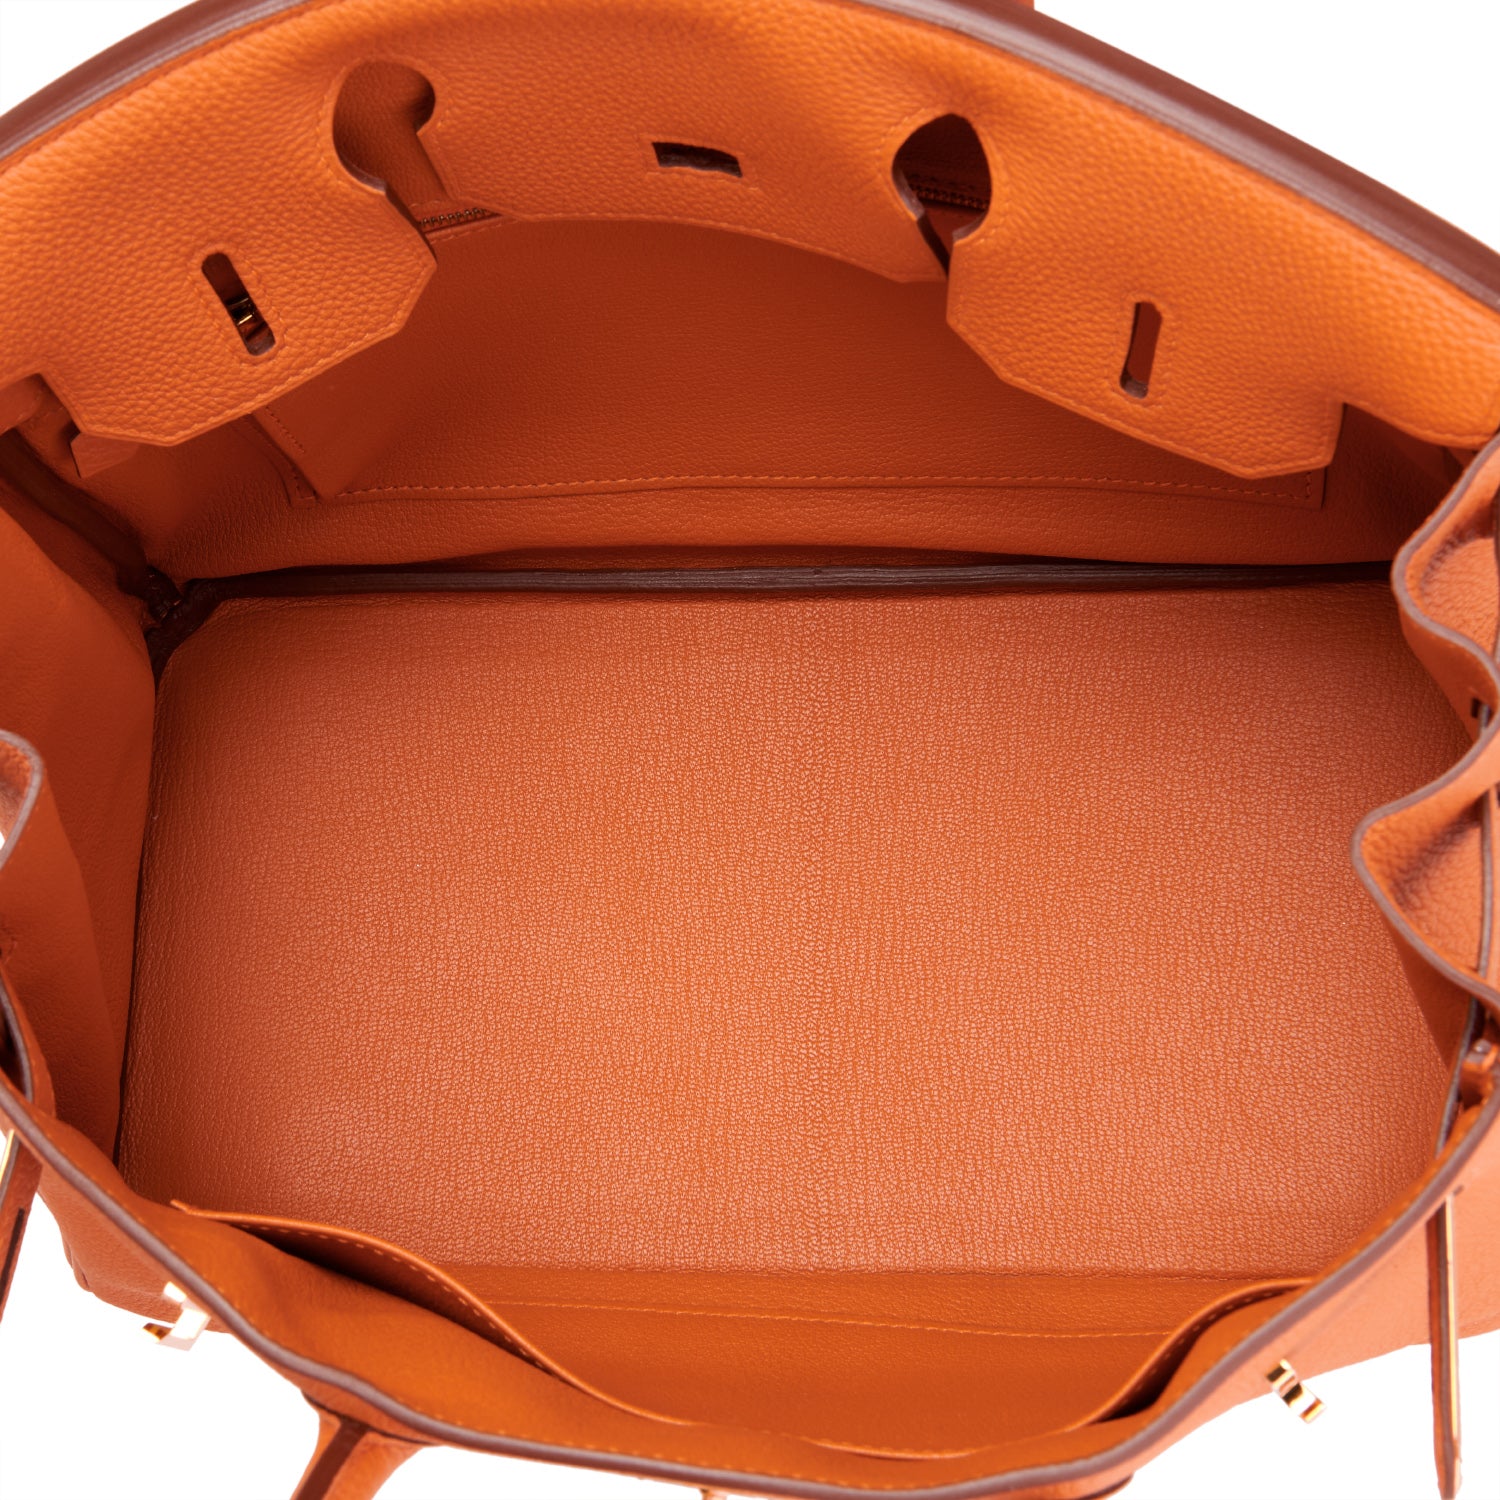 Hermes Birkin 30 orange togo 😀😀😀 gold hardware!! What fits